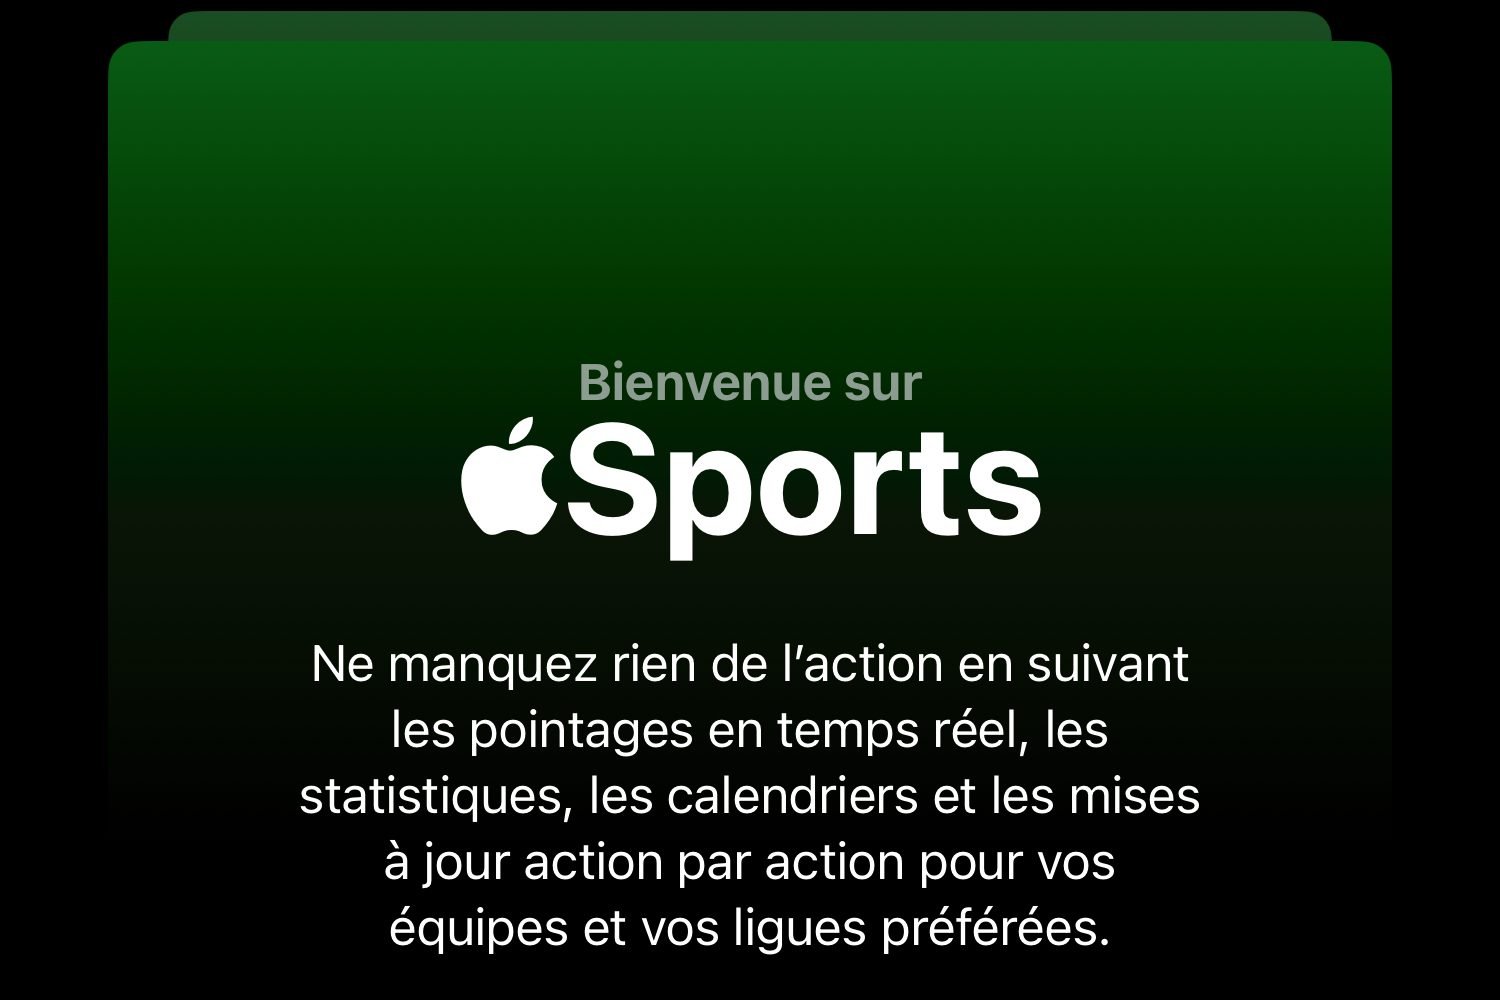 App Apple Sports